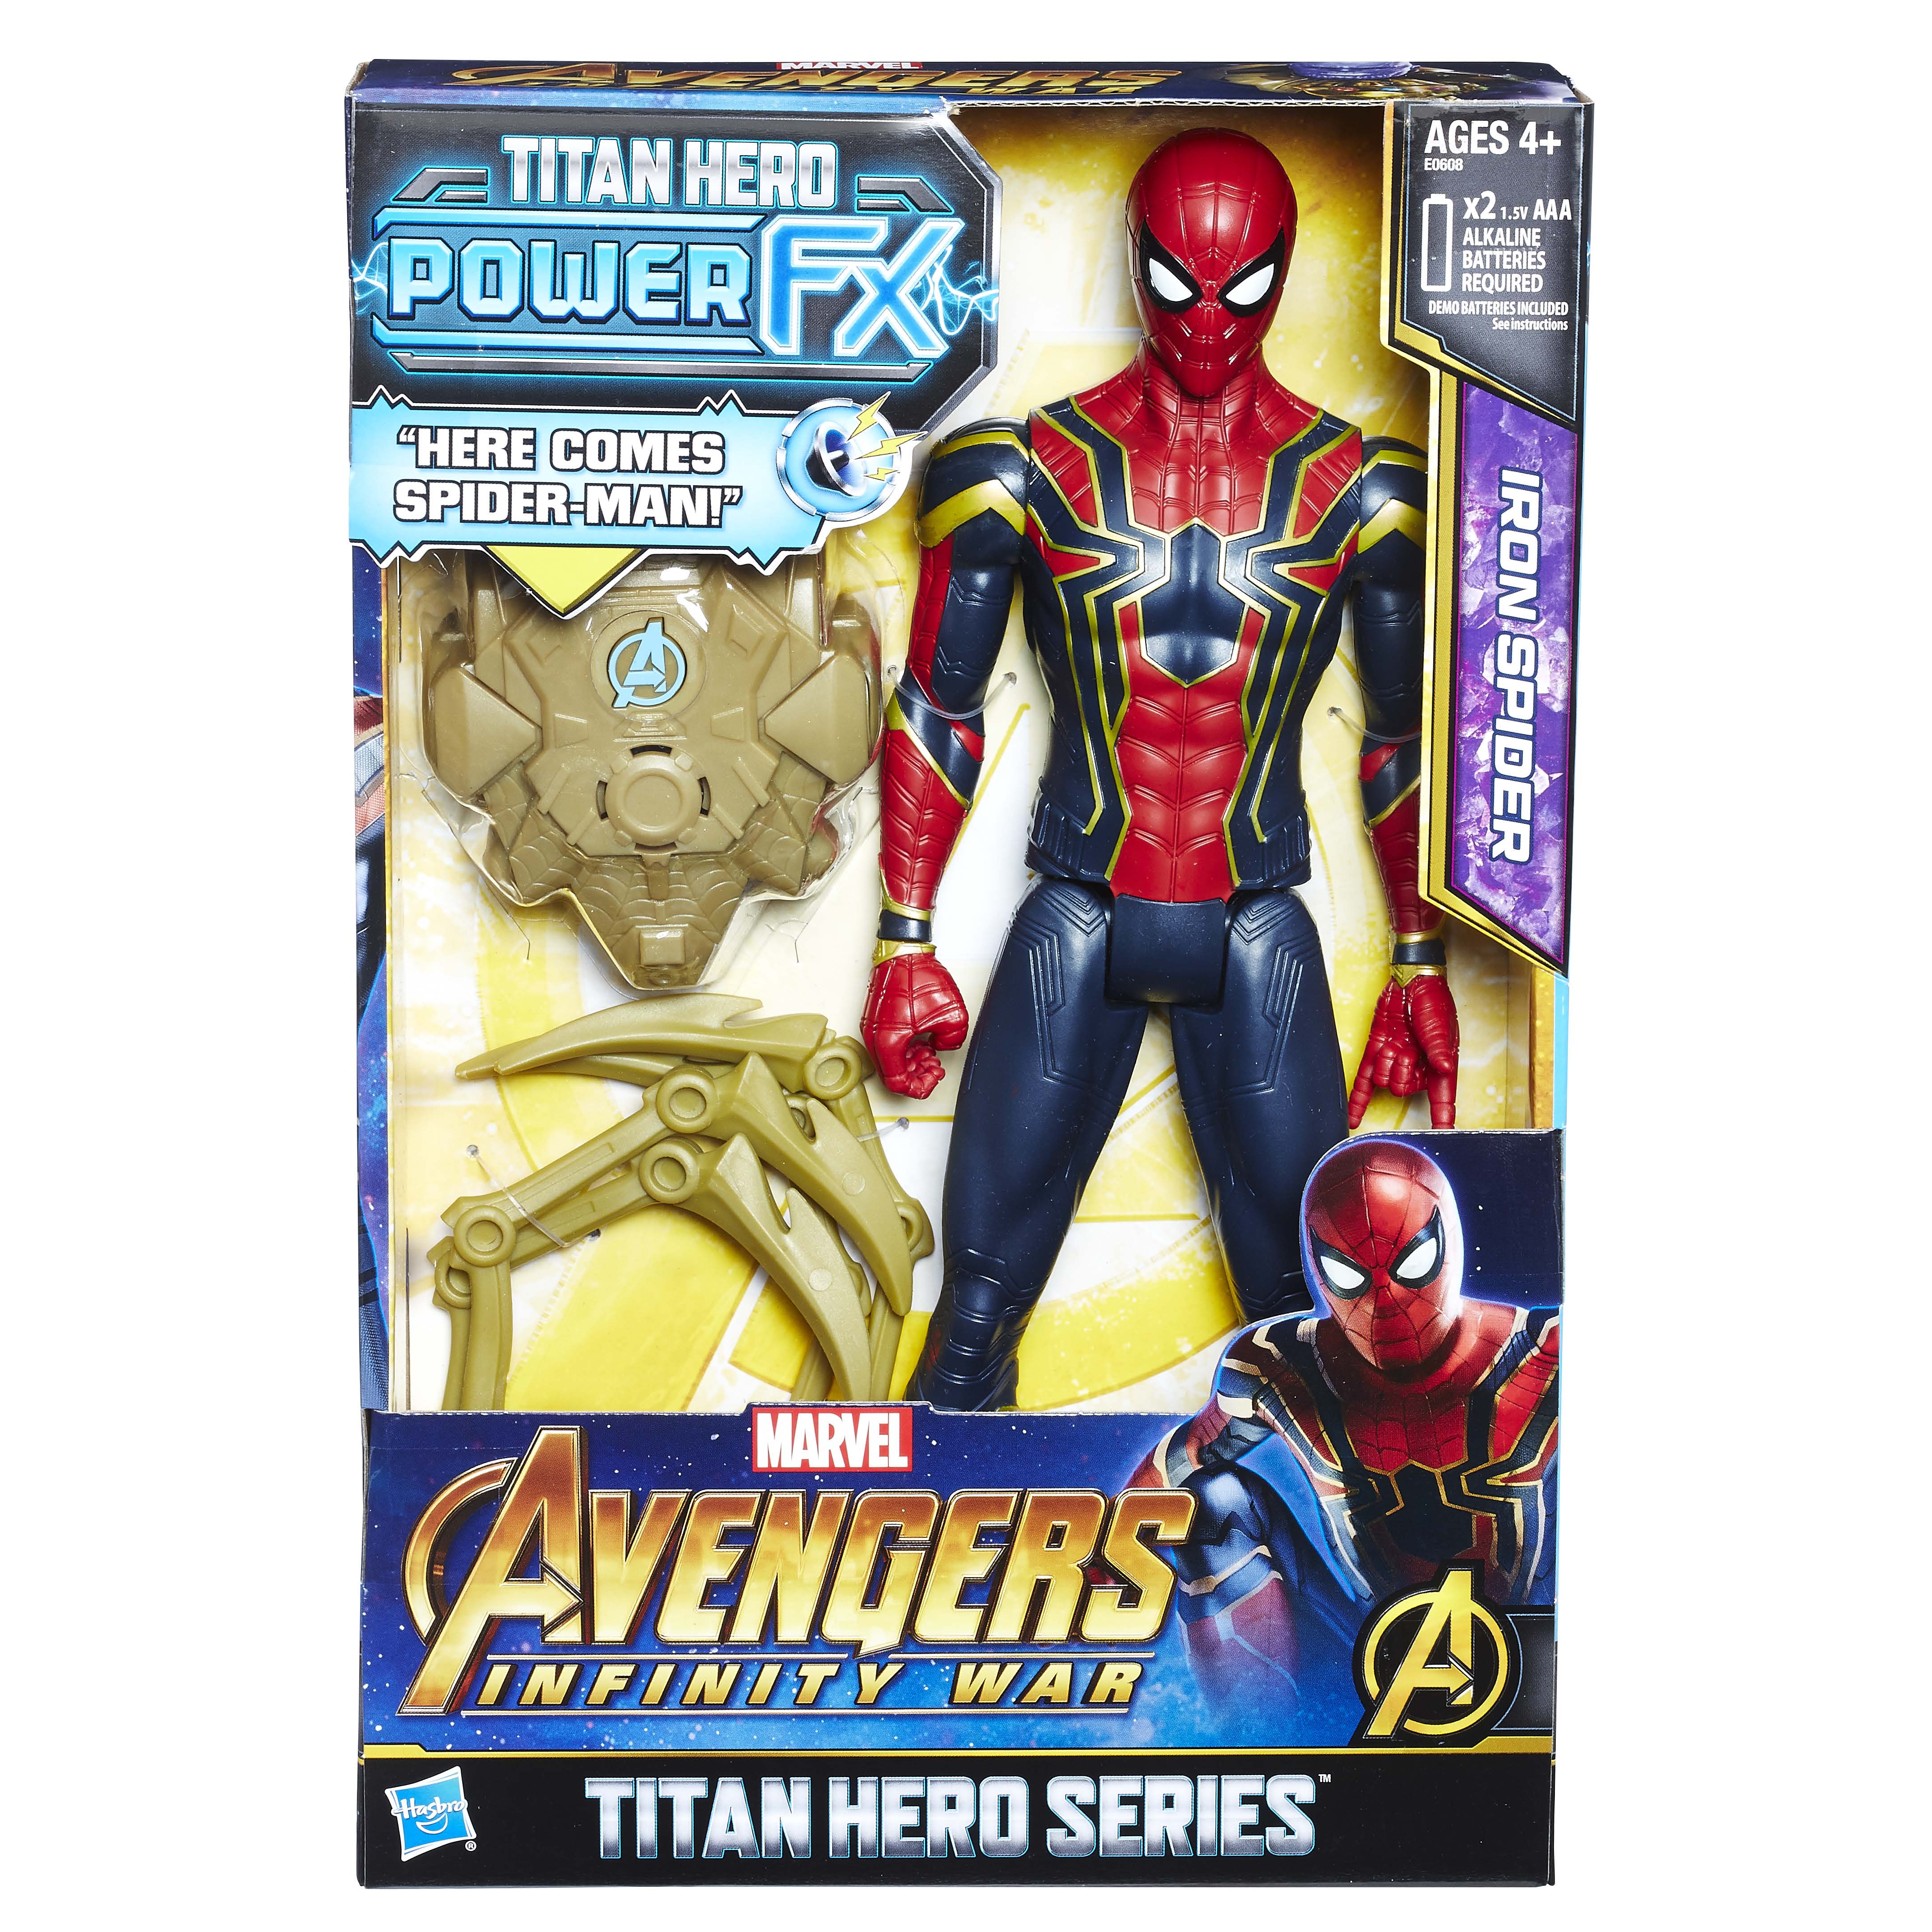 Marvel Black Panther Titan Hero Figure (Hasbro)